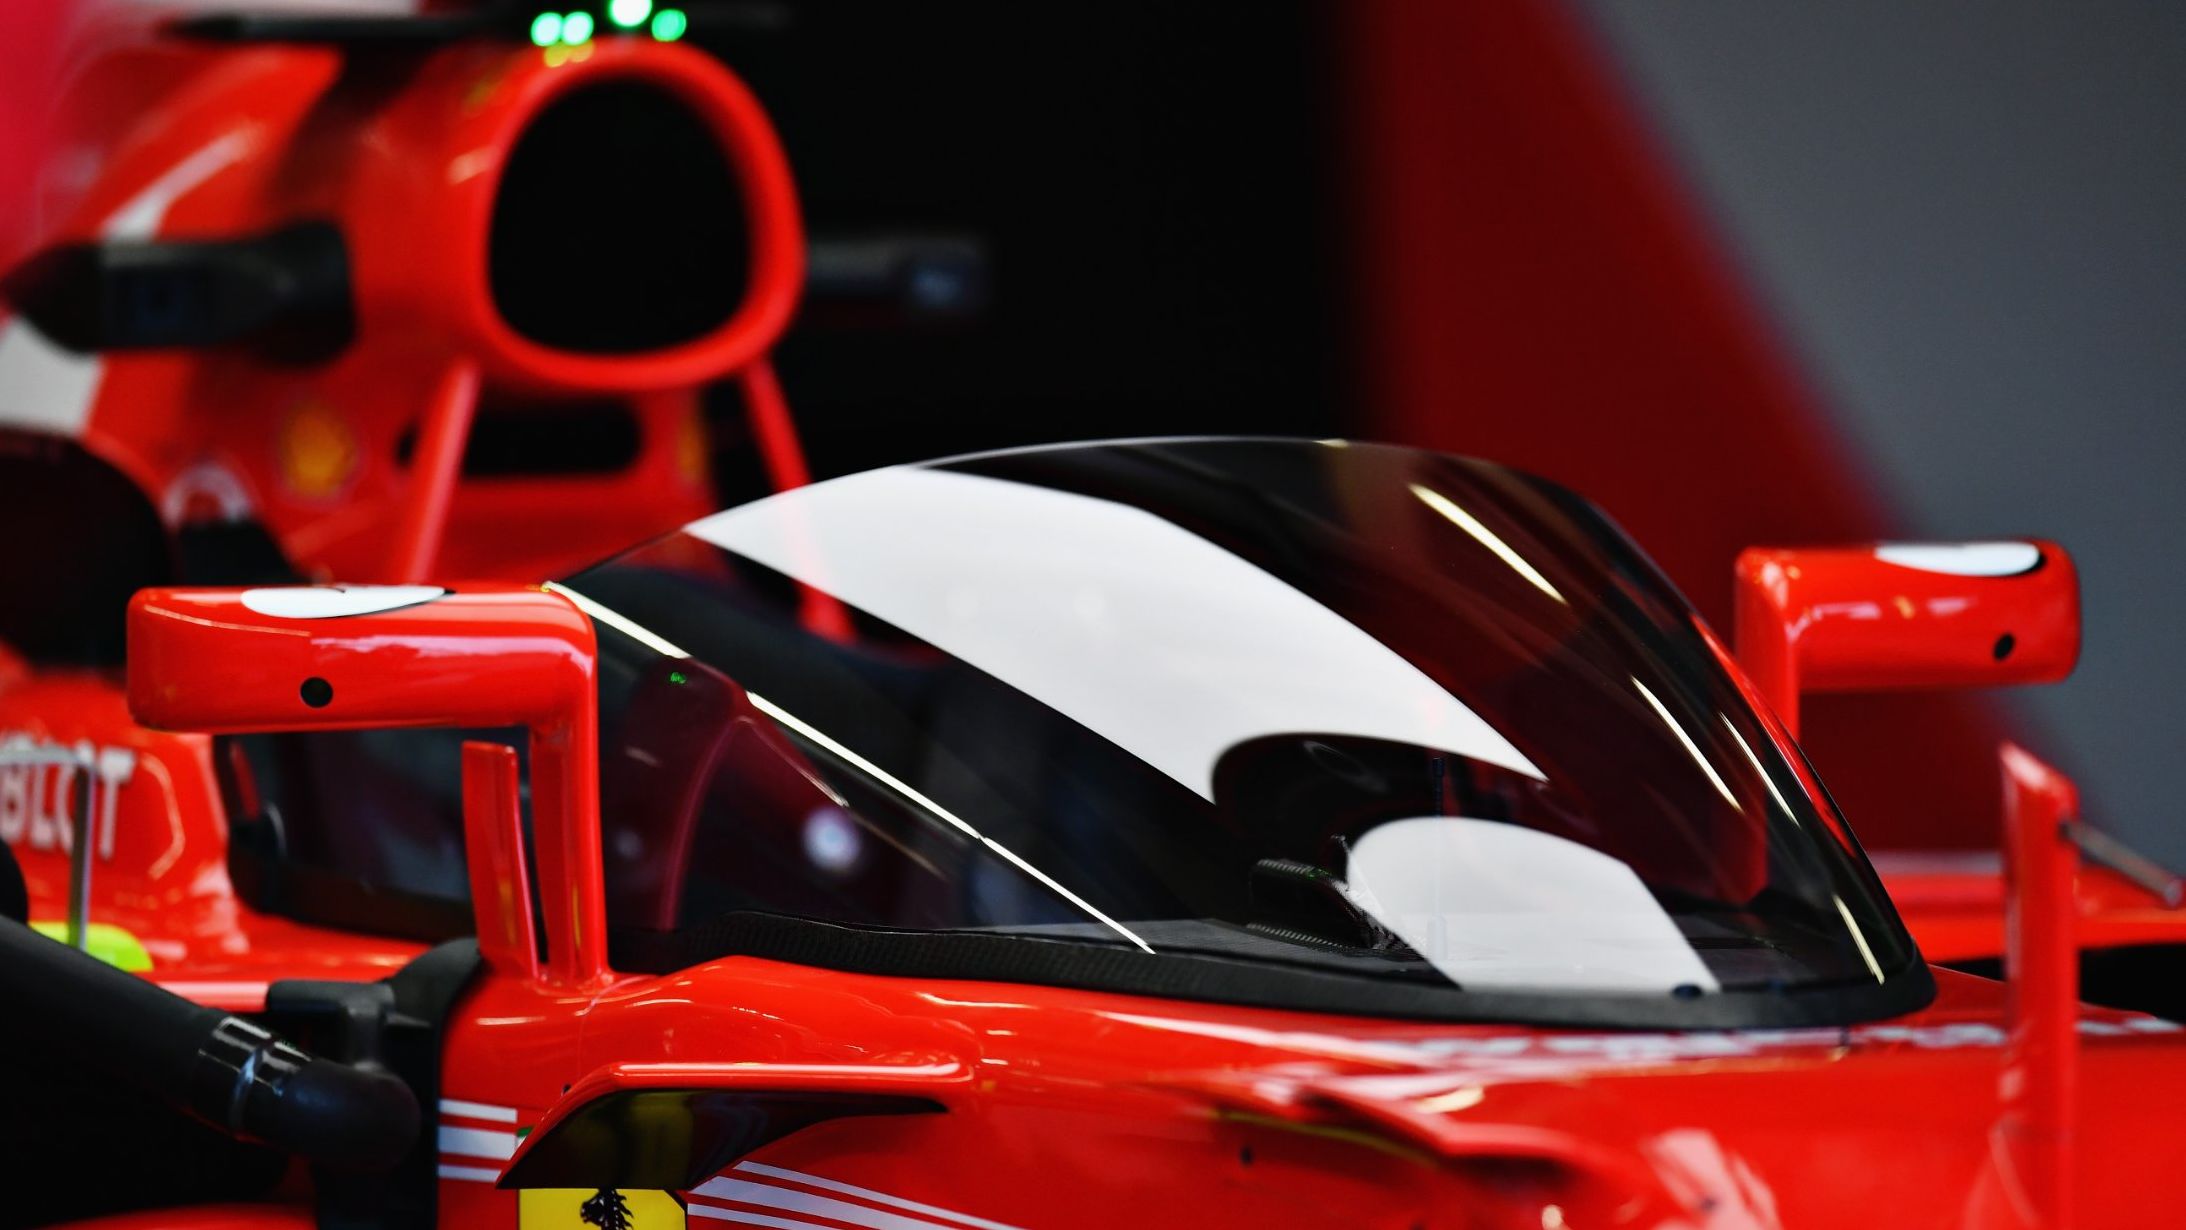 Ferrari's Sebastian Vettel trialed a "Shield" safety device at the recent British Grand Prix weekend. 